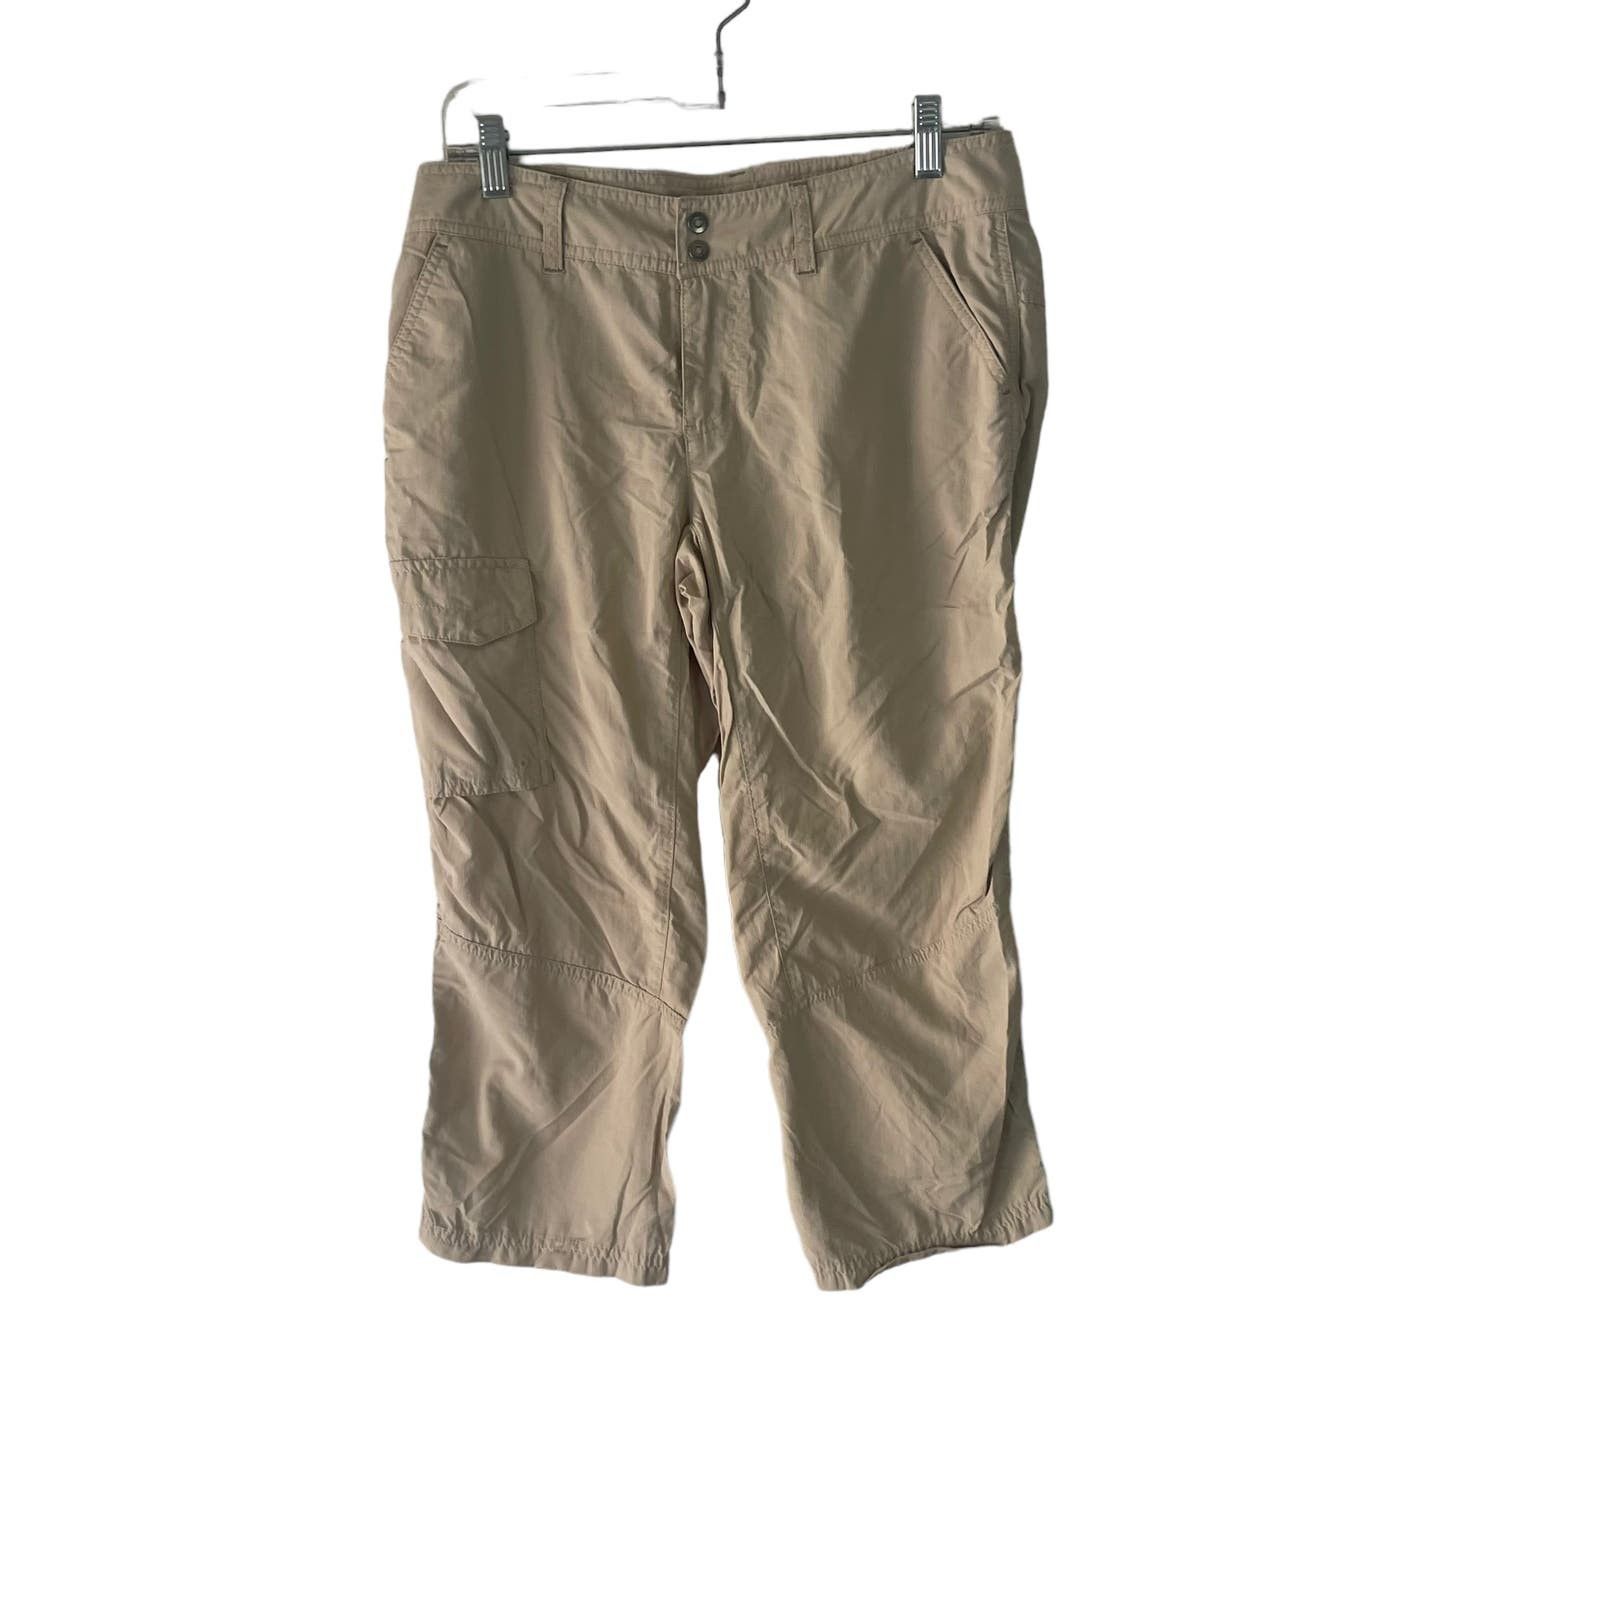 Columbia Omni Shield Advanced Repellency Capri Pants Women's Size 6, Beige